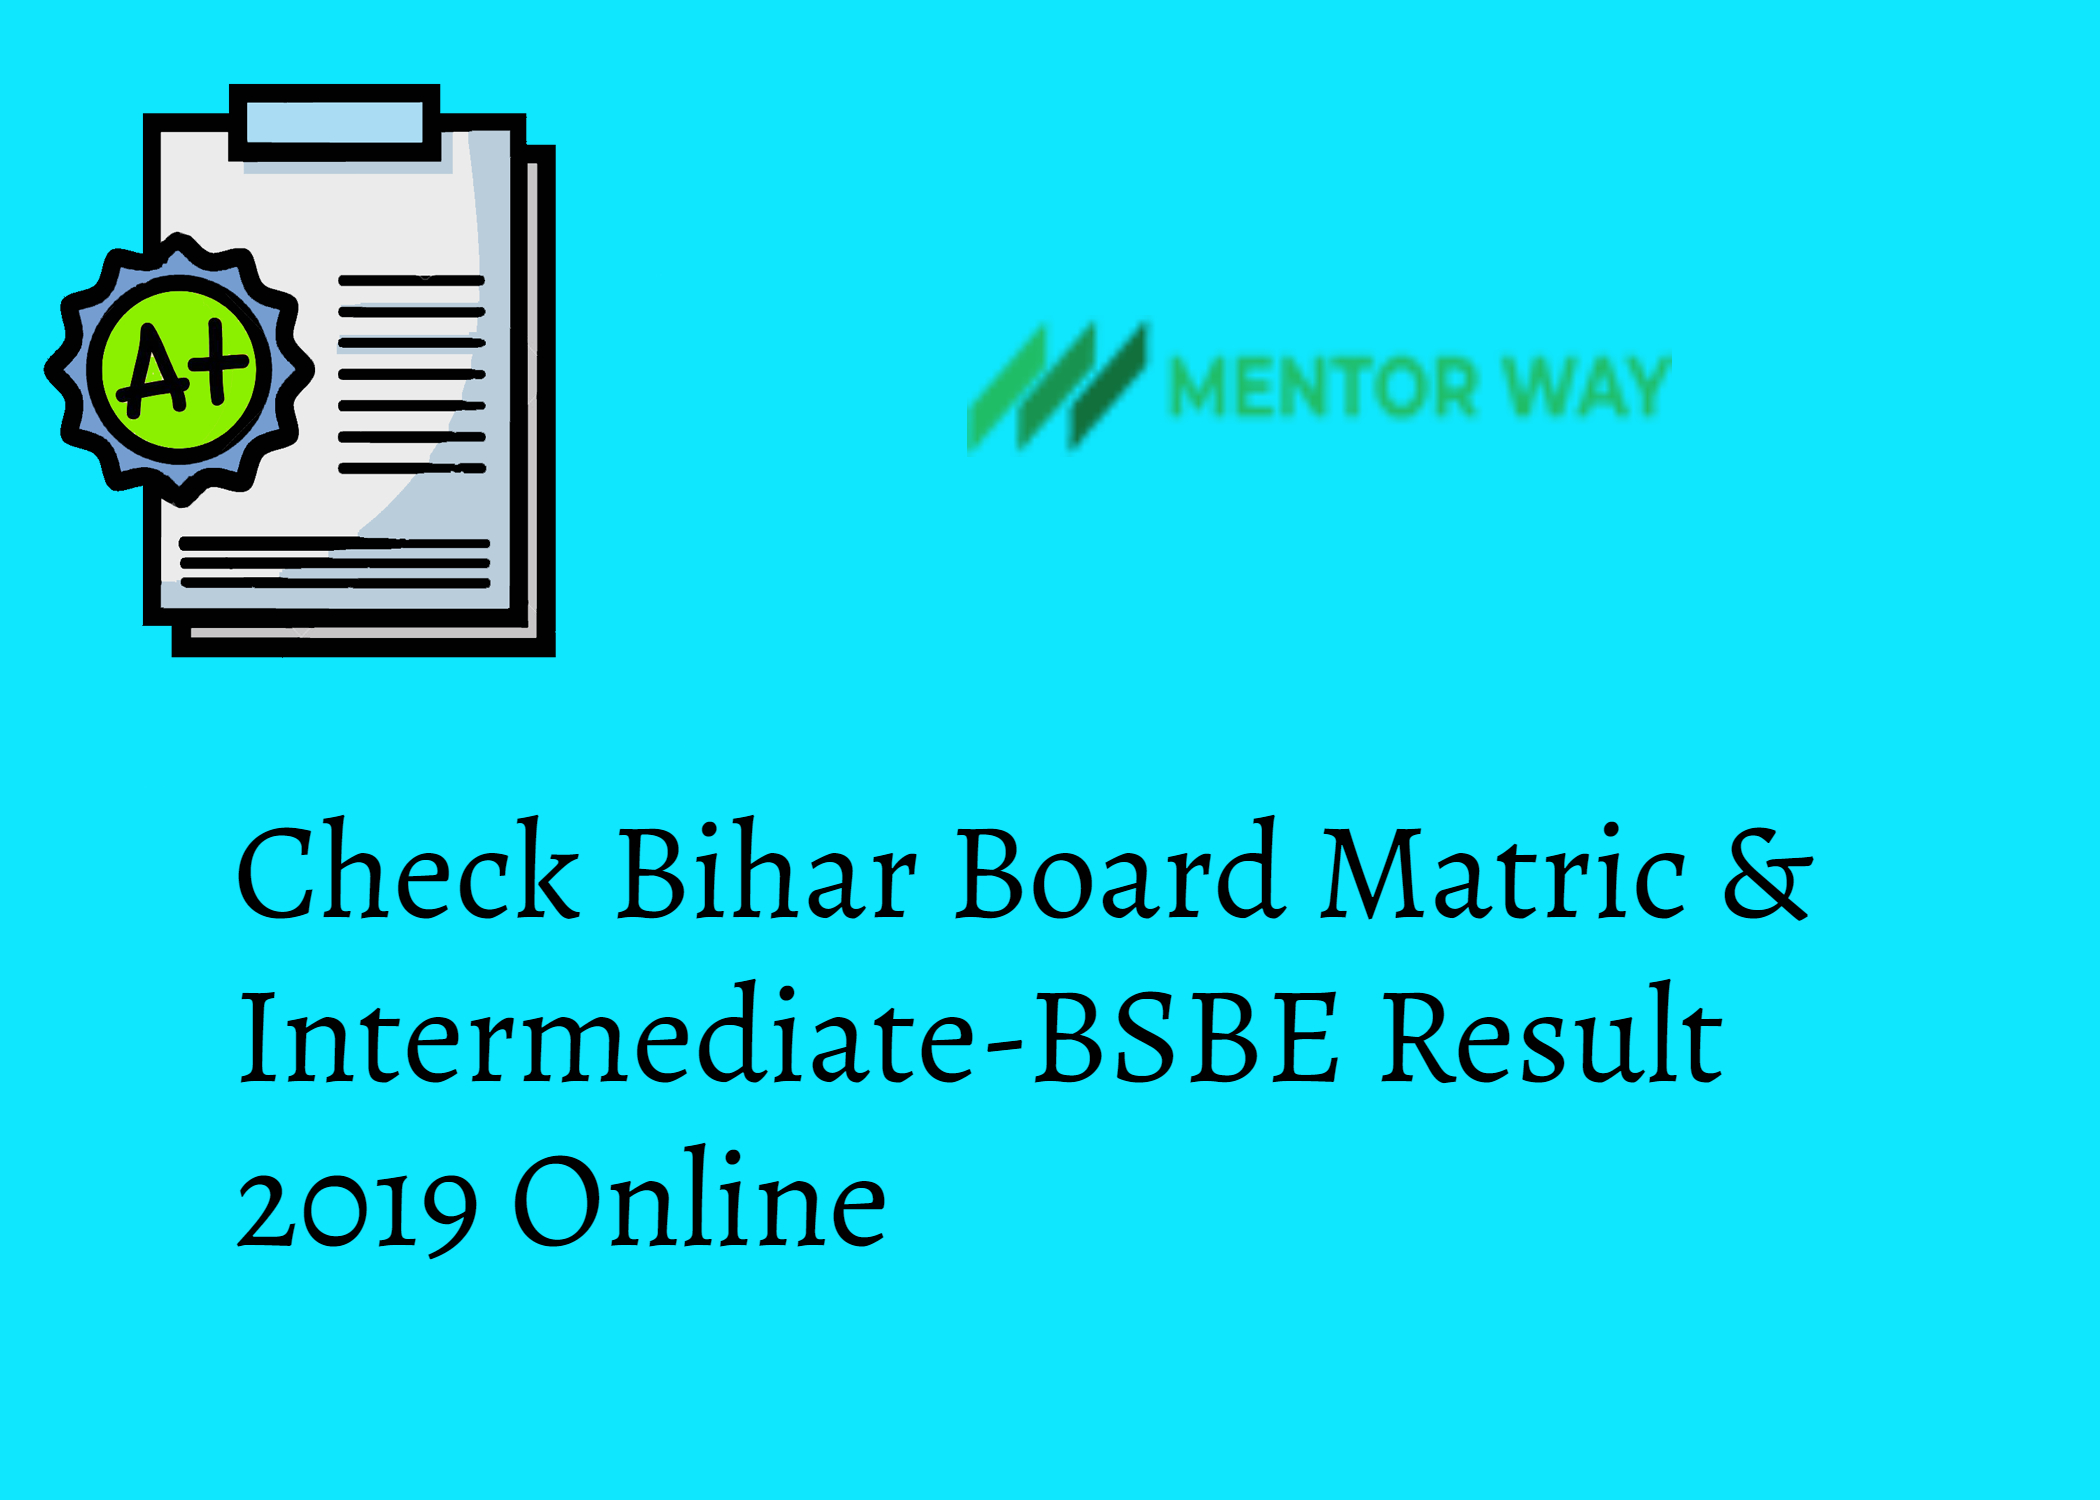 Check Bihar Board Matric & Intermediate-BSBE Result 2019 Online